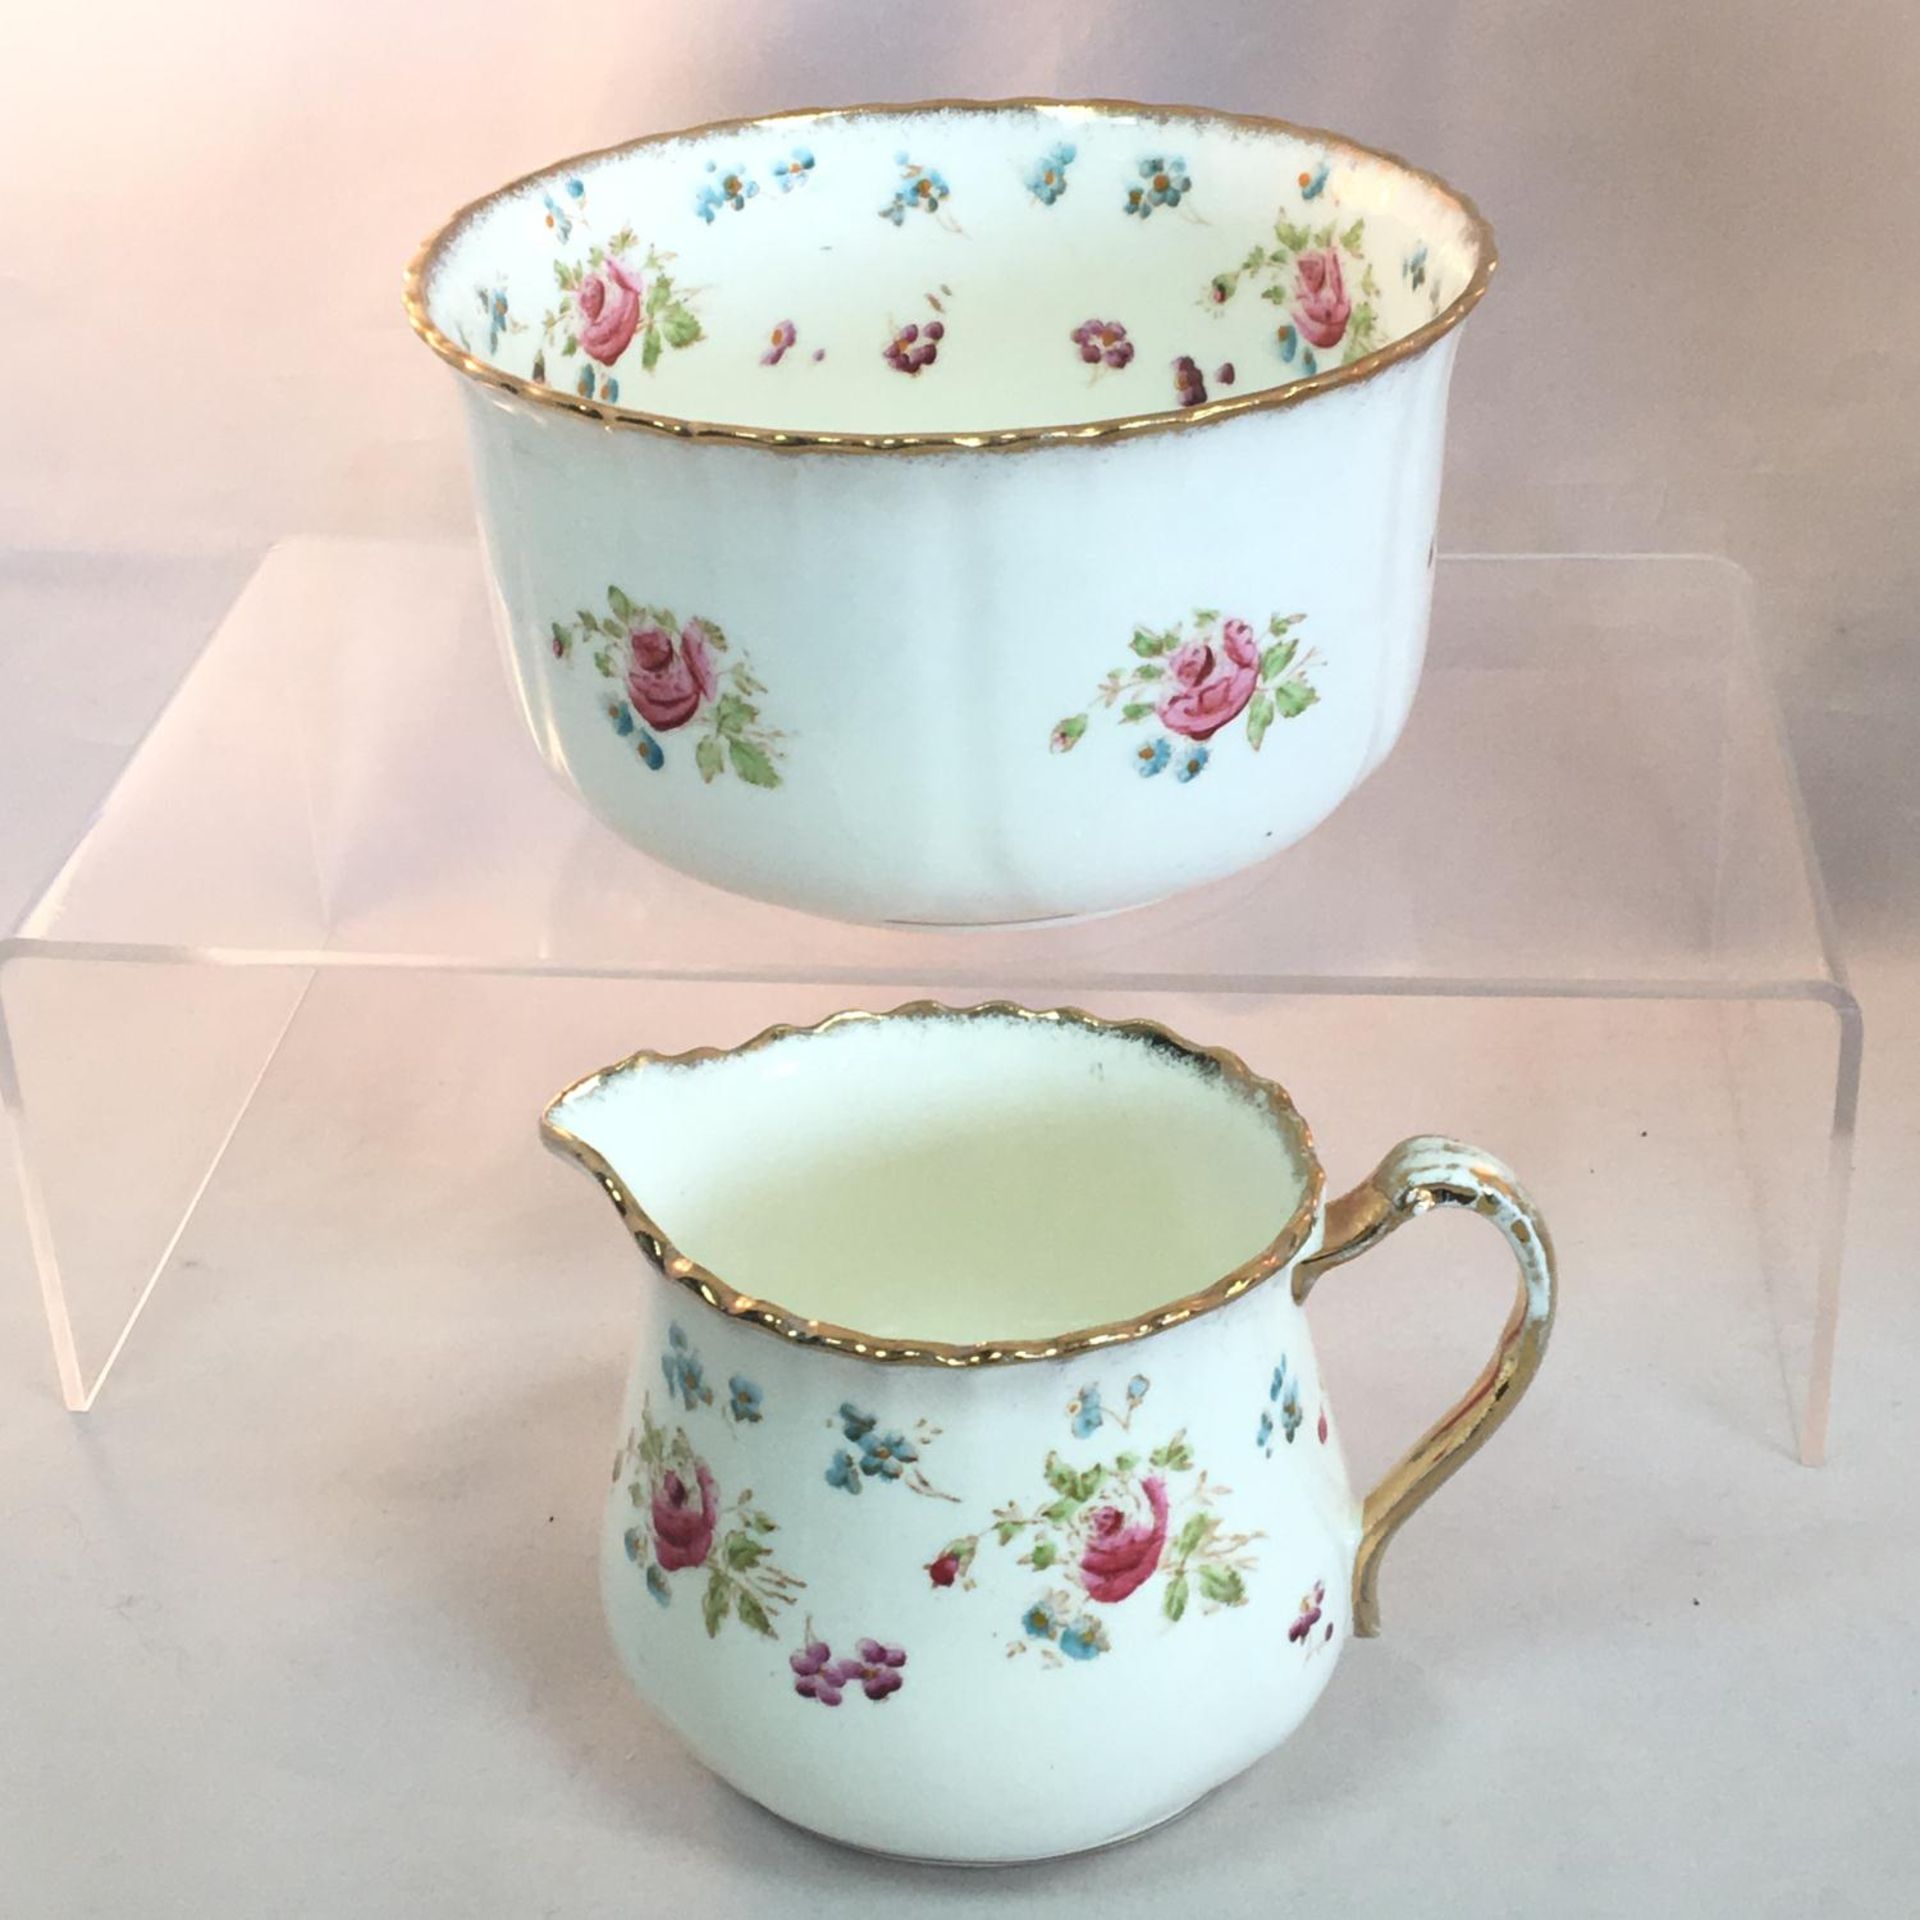 Antique handpainted porcelain milk jug and sugar bowl, no chips, no cracks - Victorian era